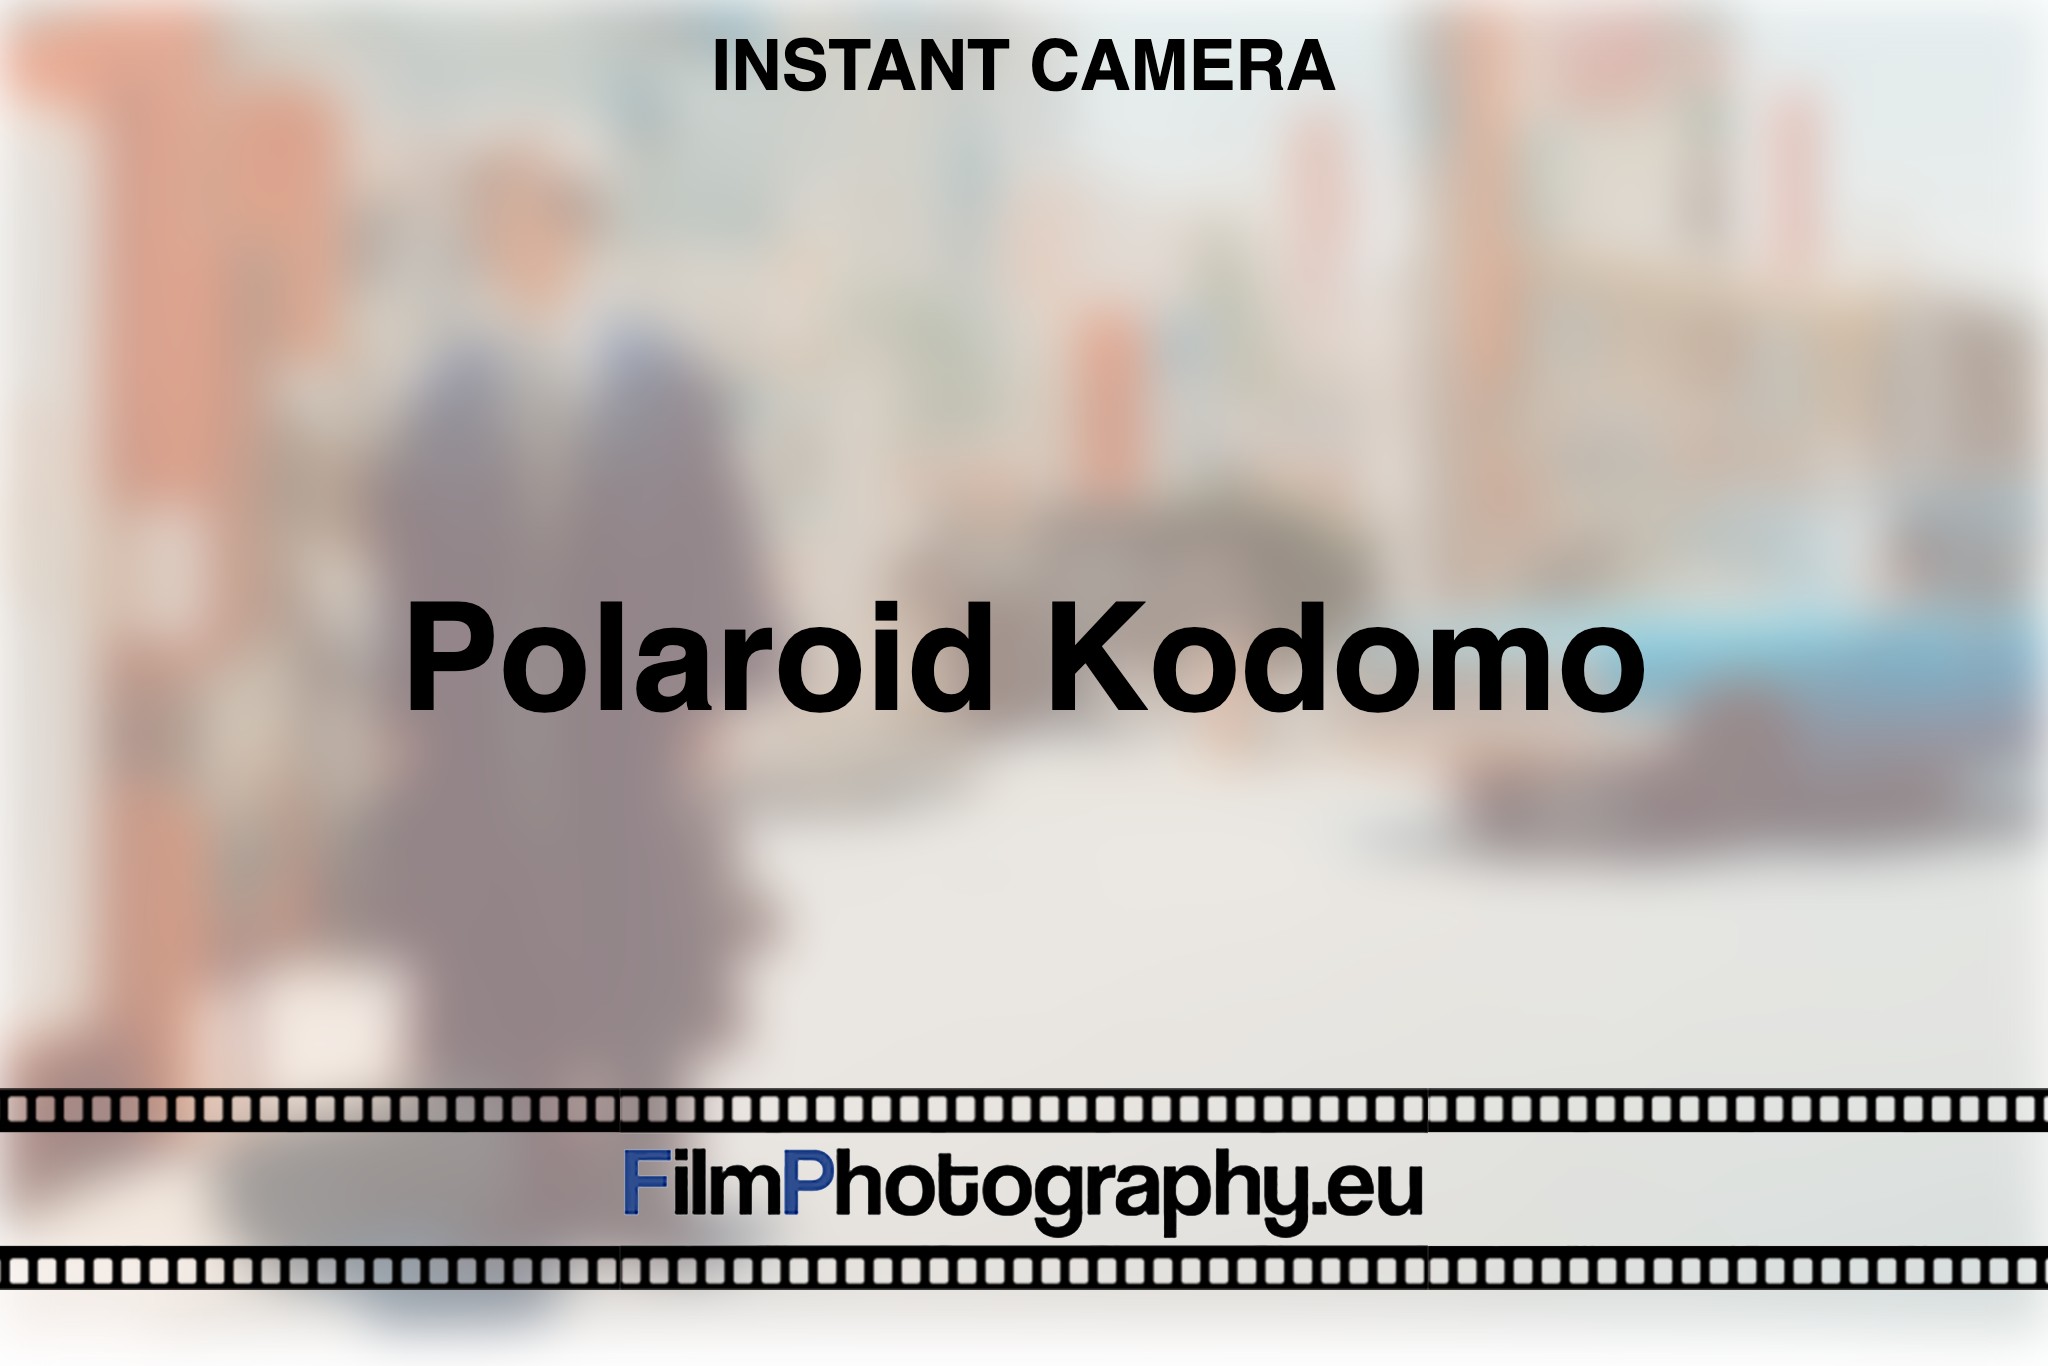 polaroid-kodomo-instant-camera-bnv